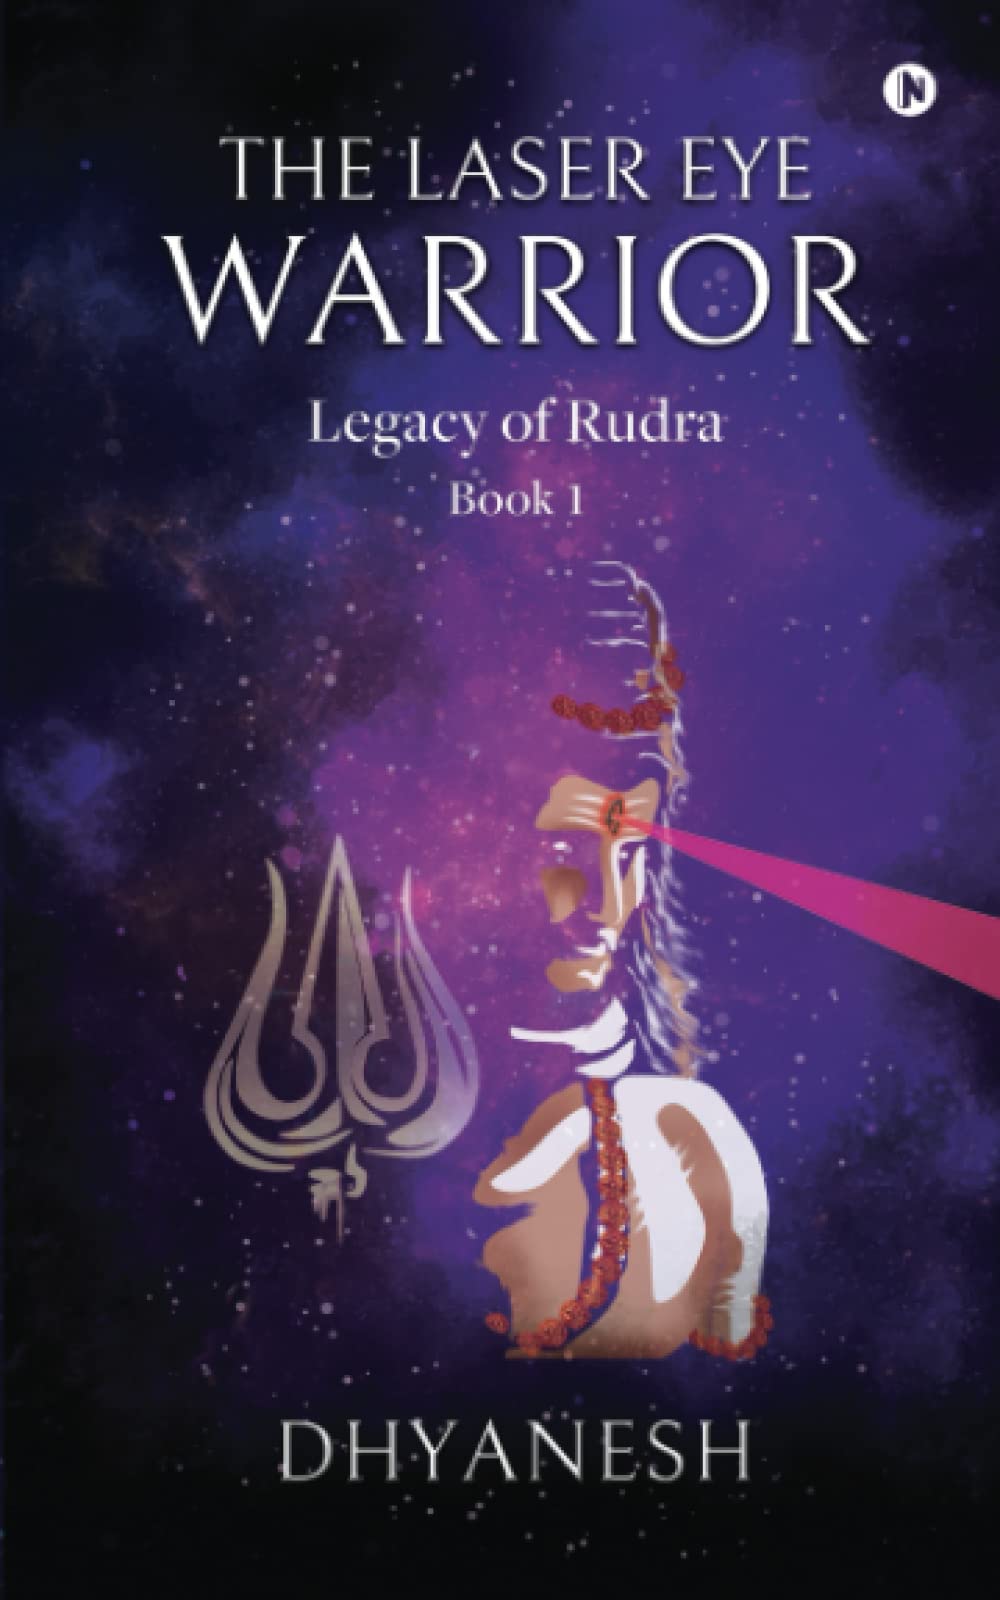 Rudra: The Laser Eye Warrior by Dhyanesh Shankar